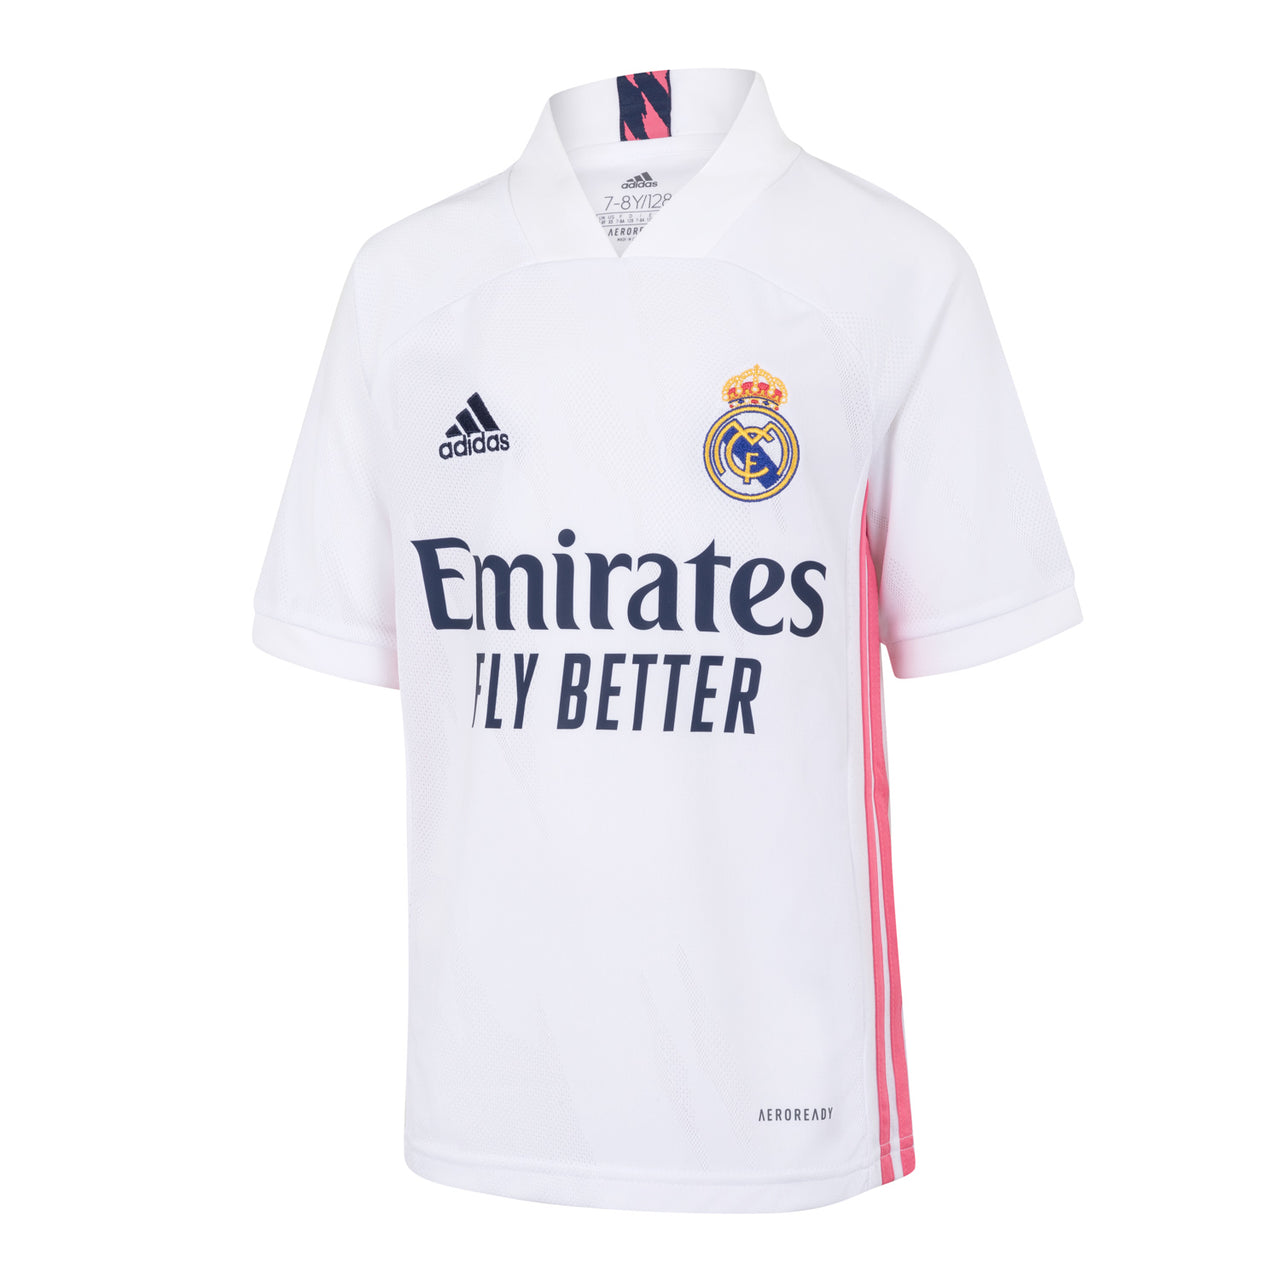 uniforme del real madrid 2021 para dream league soccer 2020